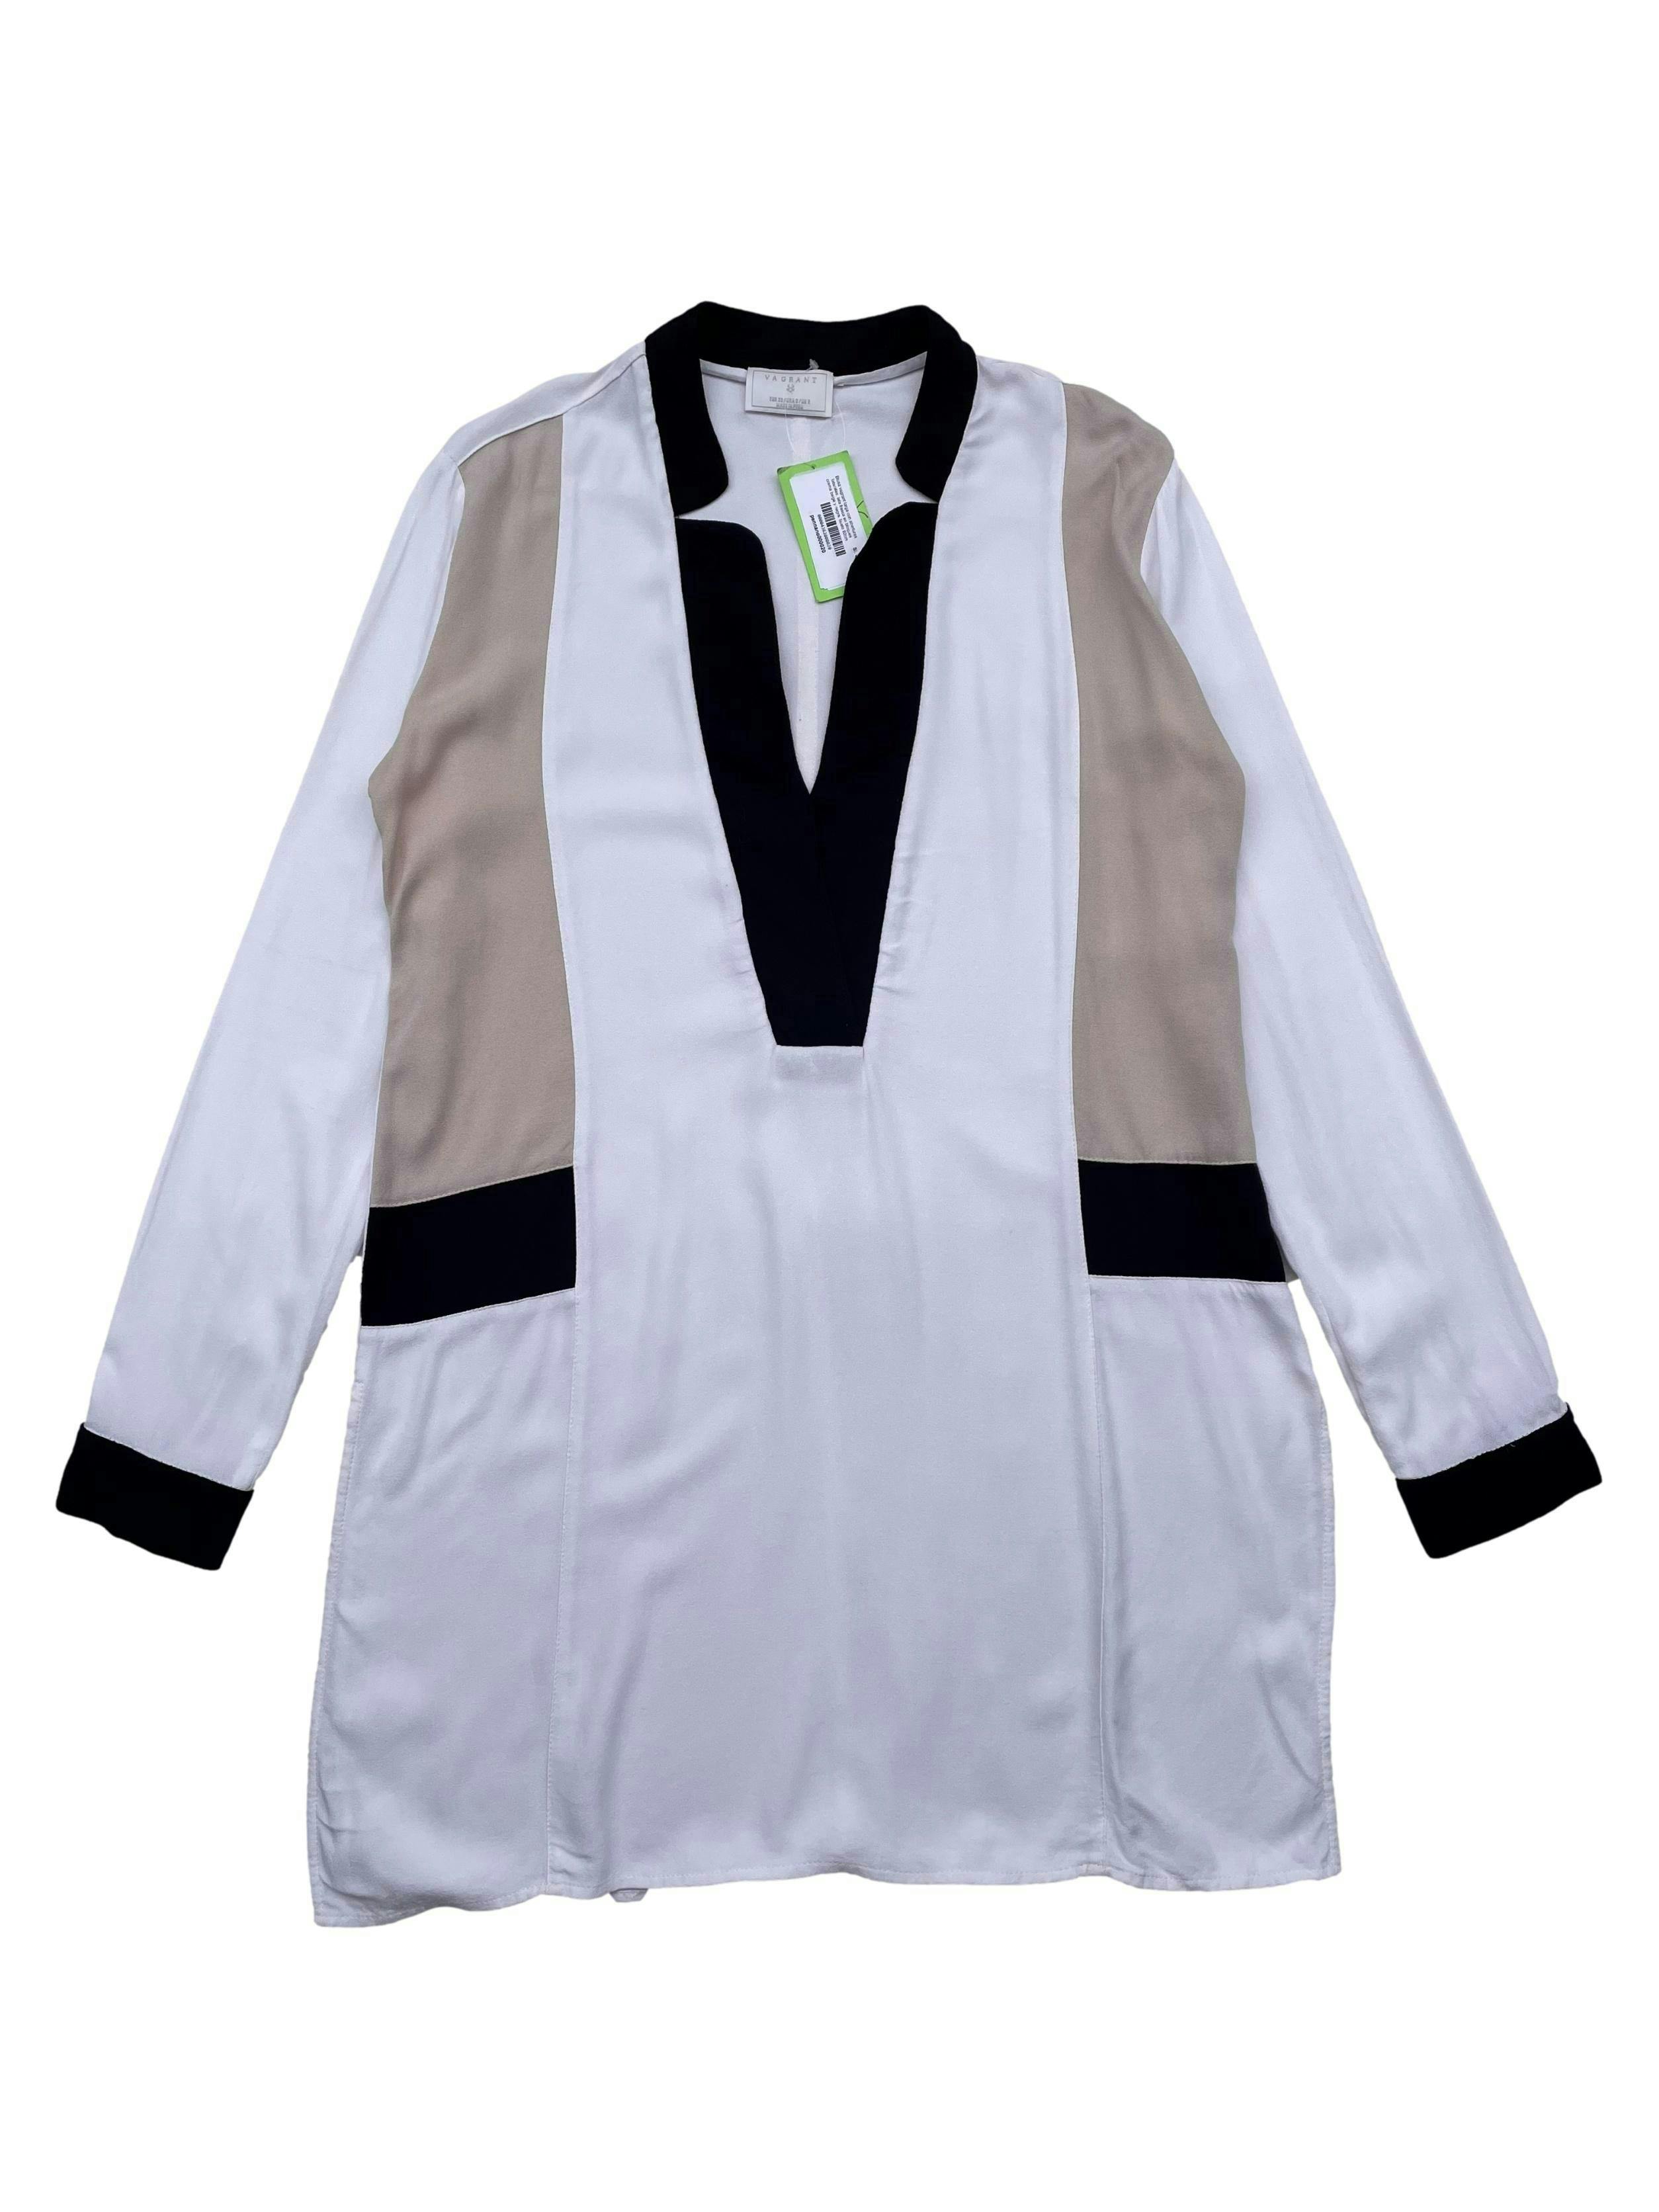 Blusa Vagrant larga con aberturas laterales, tela fresca en bloques crema beige y negra. Busto 92cm Largo 75cm